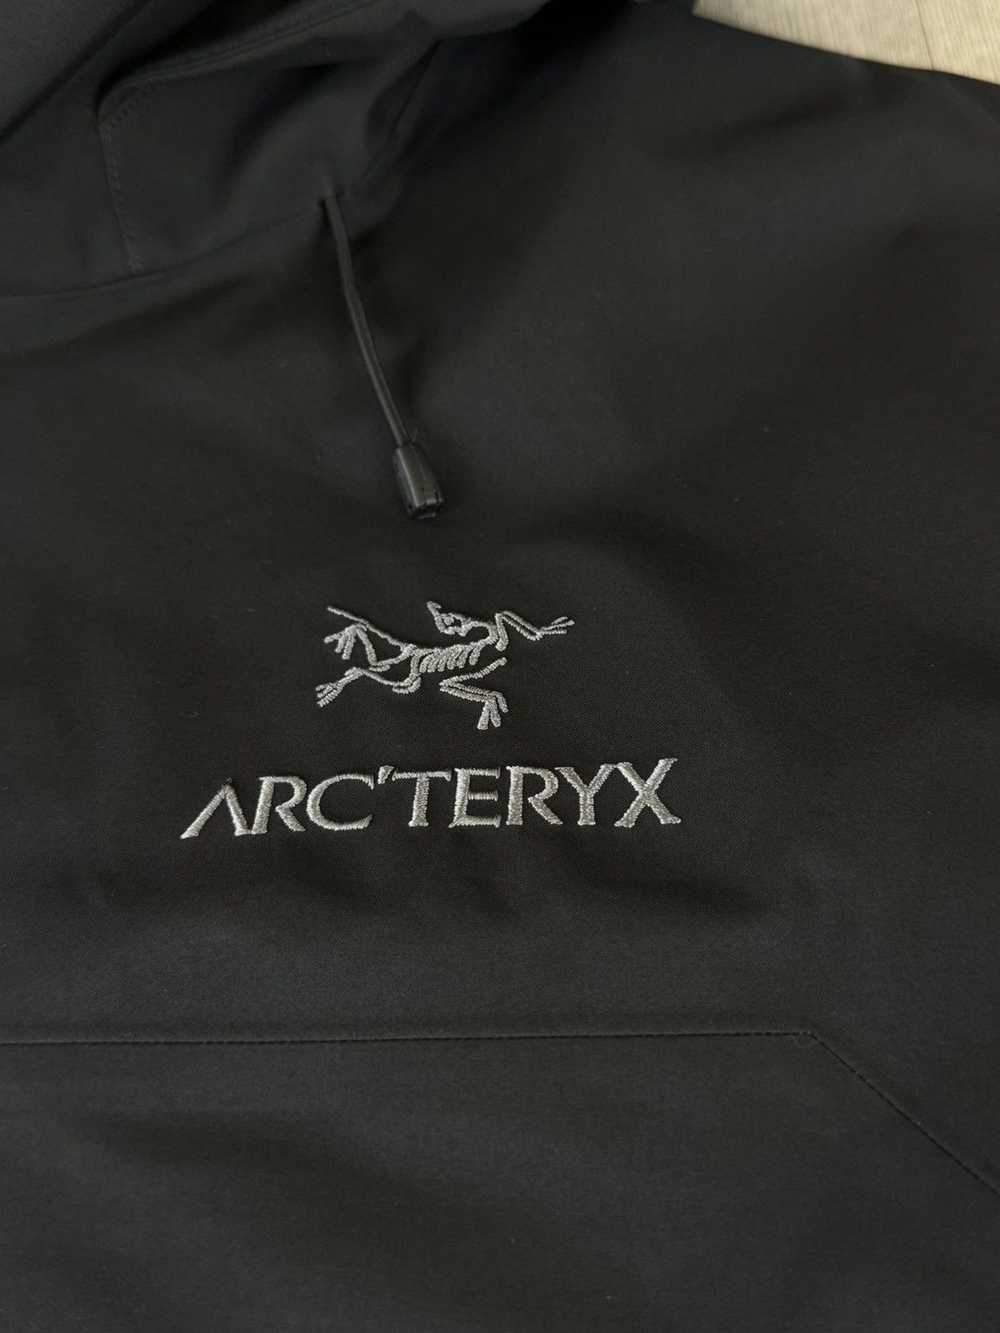 Arc'Teryx Arc’teryx Beta AR Jacket - image 2